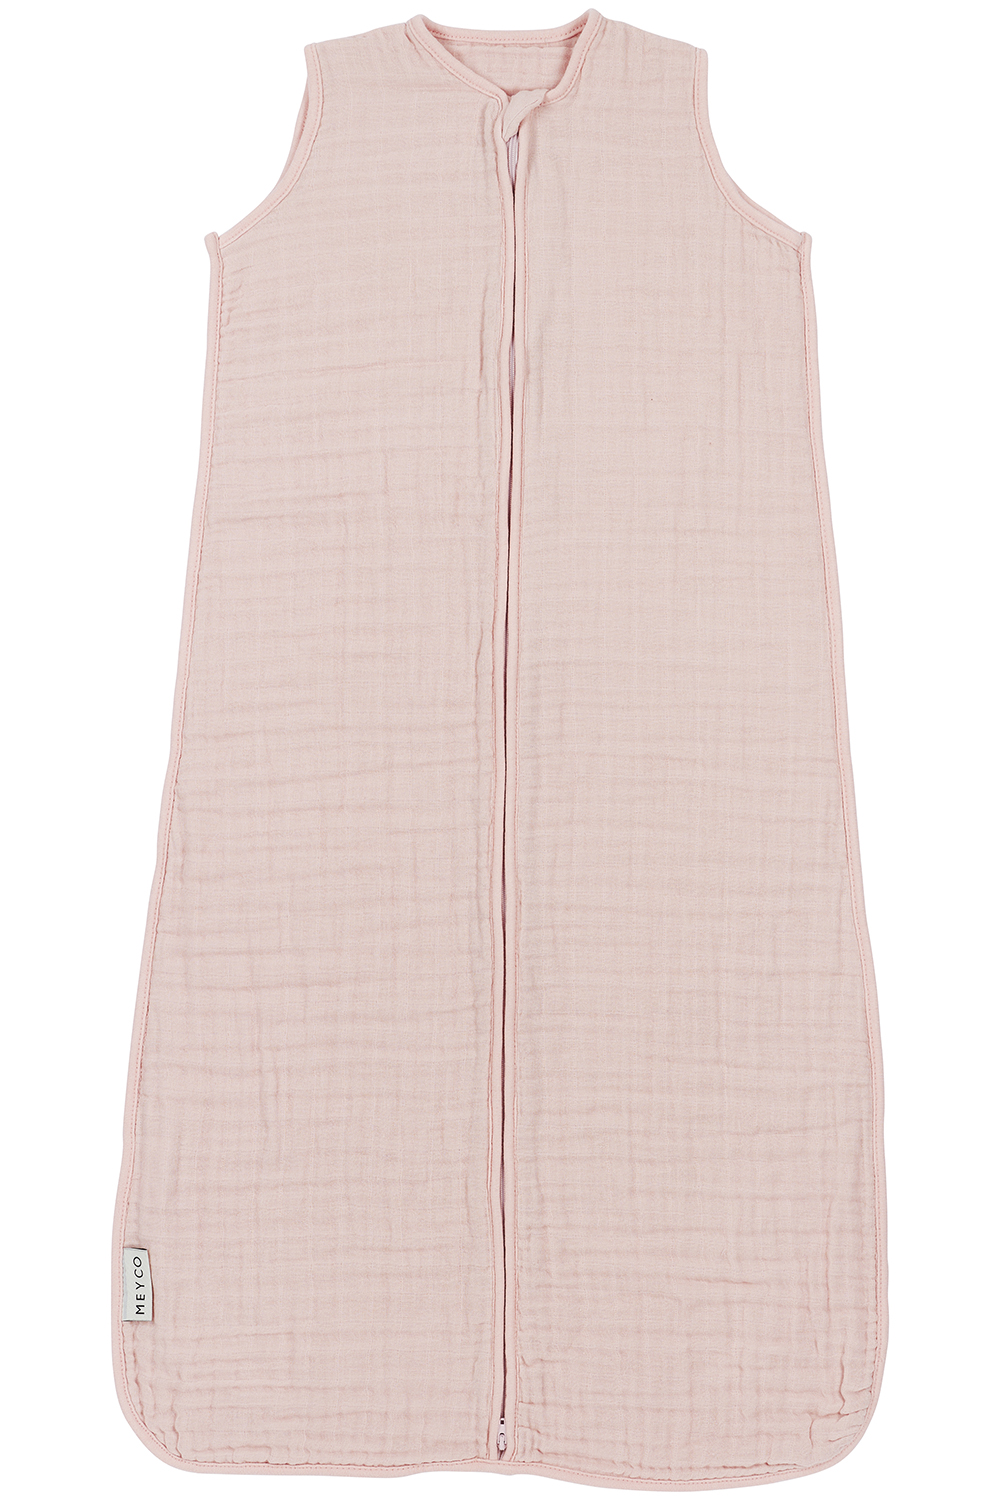 Sleepingbag muslin Uni - soft pink - 110cm